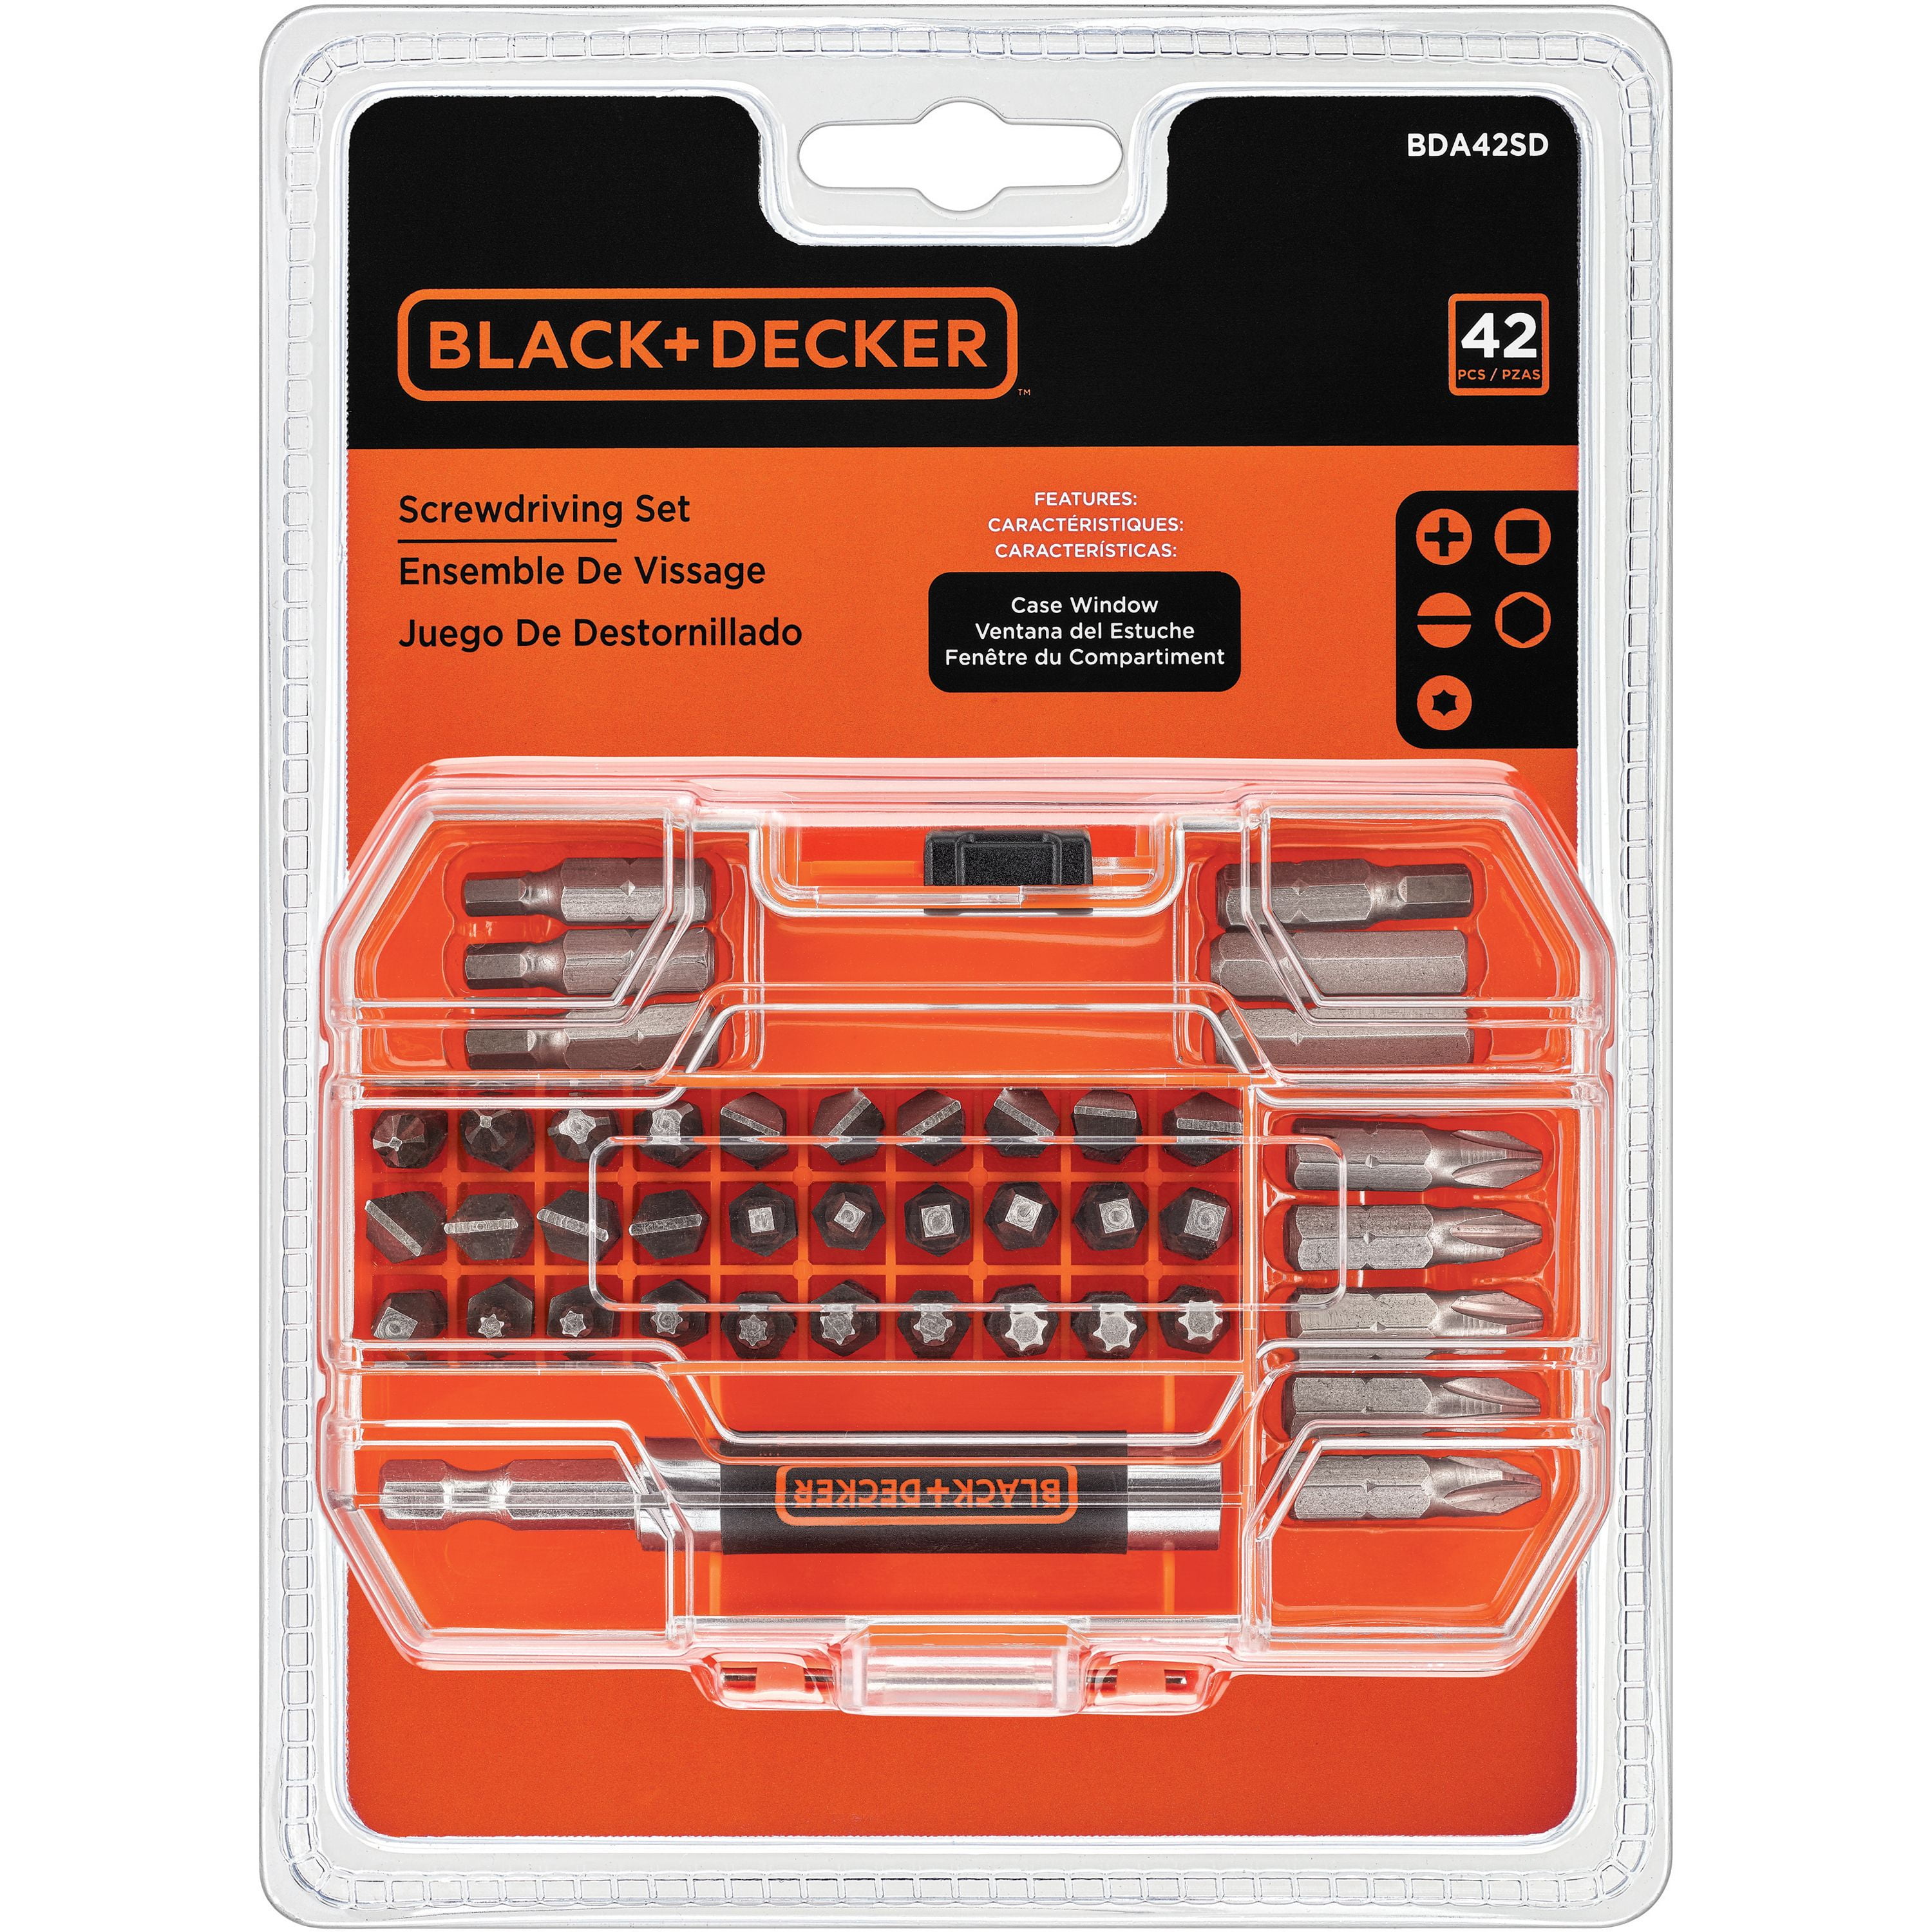 BLACK+DECKER BDA42SD 42 piece Screwdriving Set